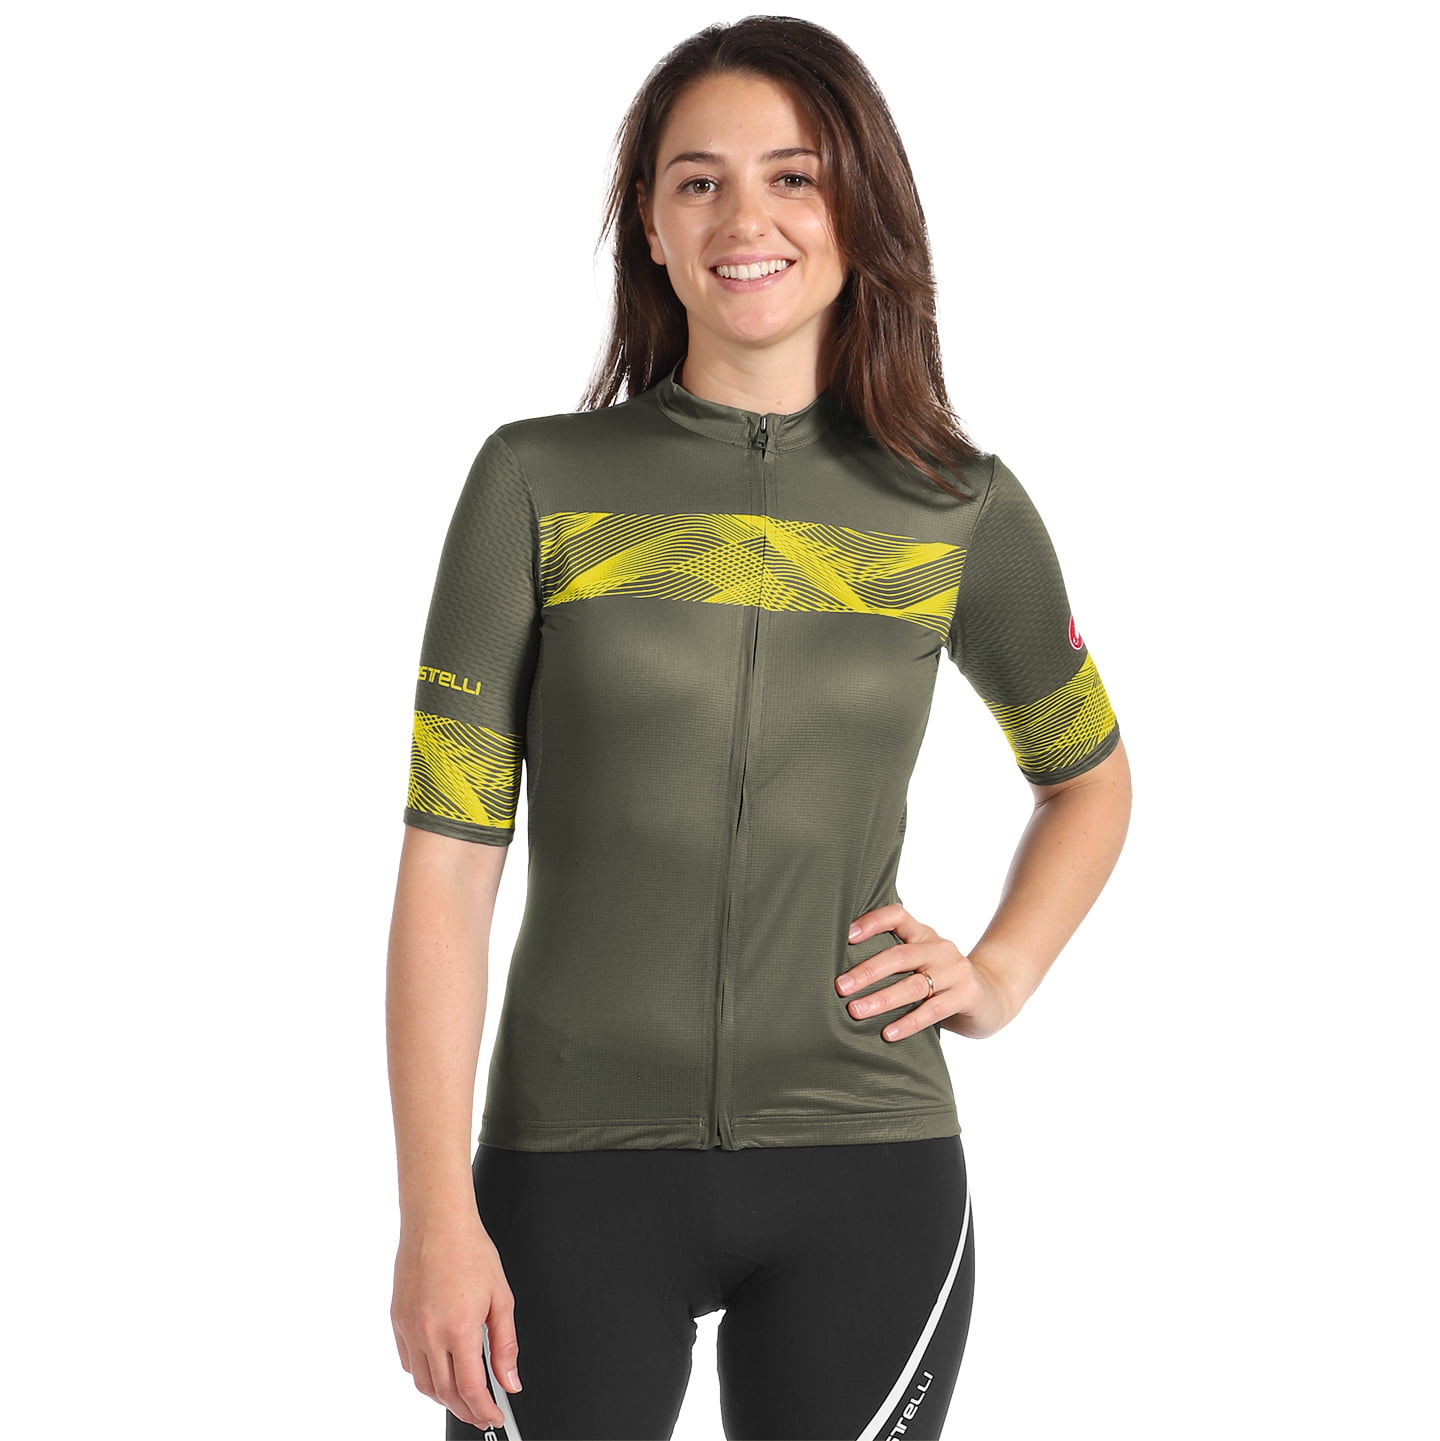 CASTELLI Fenice Women’s Jersey Women’s Short Sleeve Jersey, size M, Cycling jersey, Cycle clothing